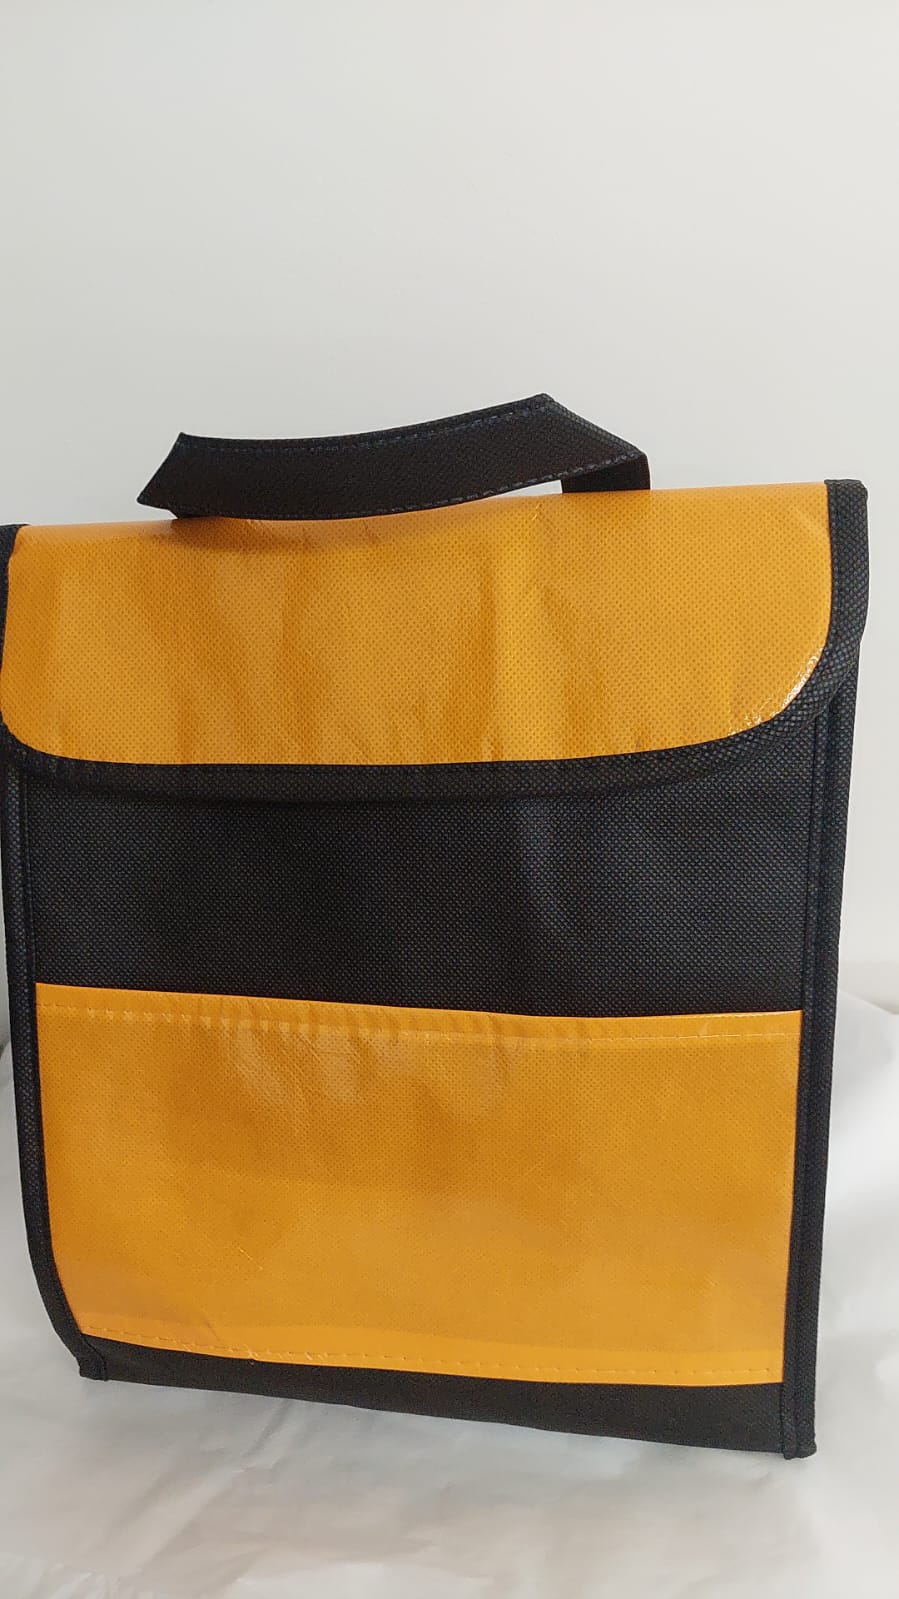 54550 - Cooling Insulated Bag USA